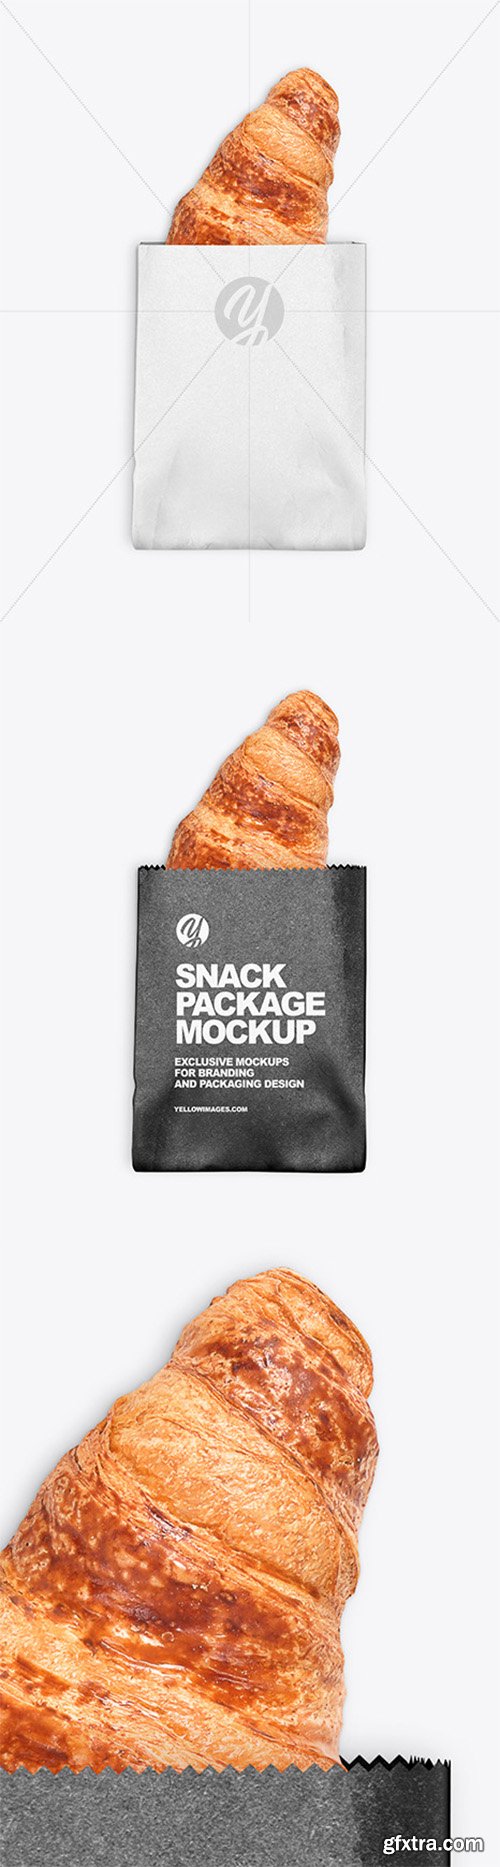 Download 32+ Bread Packaging Mockup Psd Potoshop - 32+ Bread ...